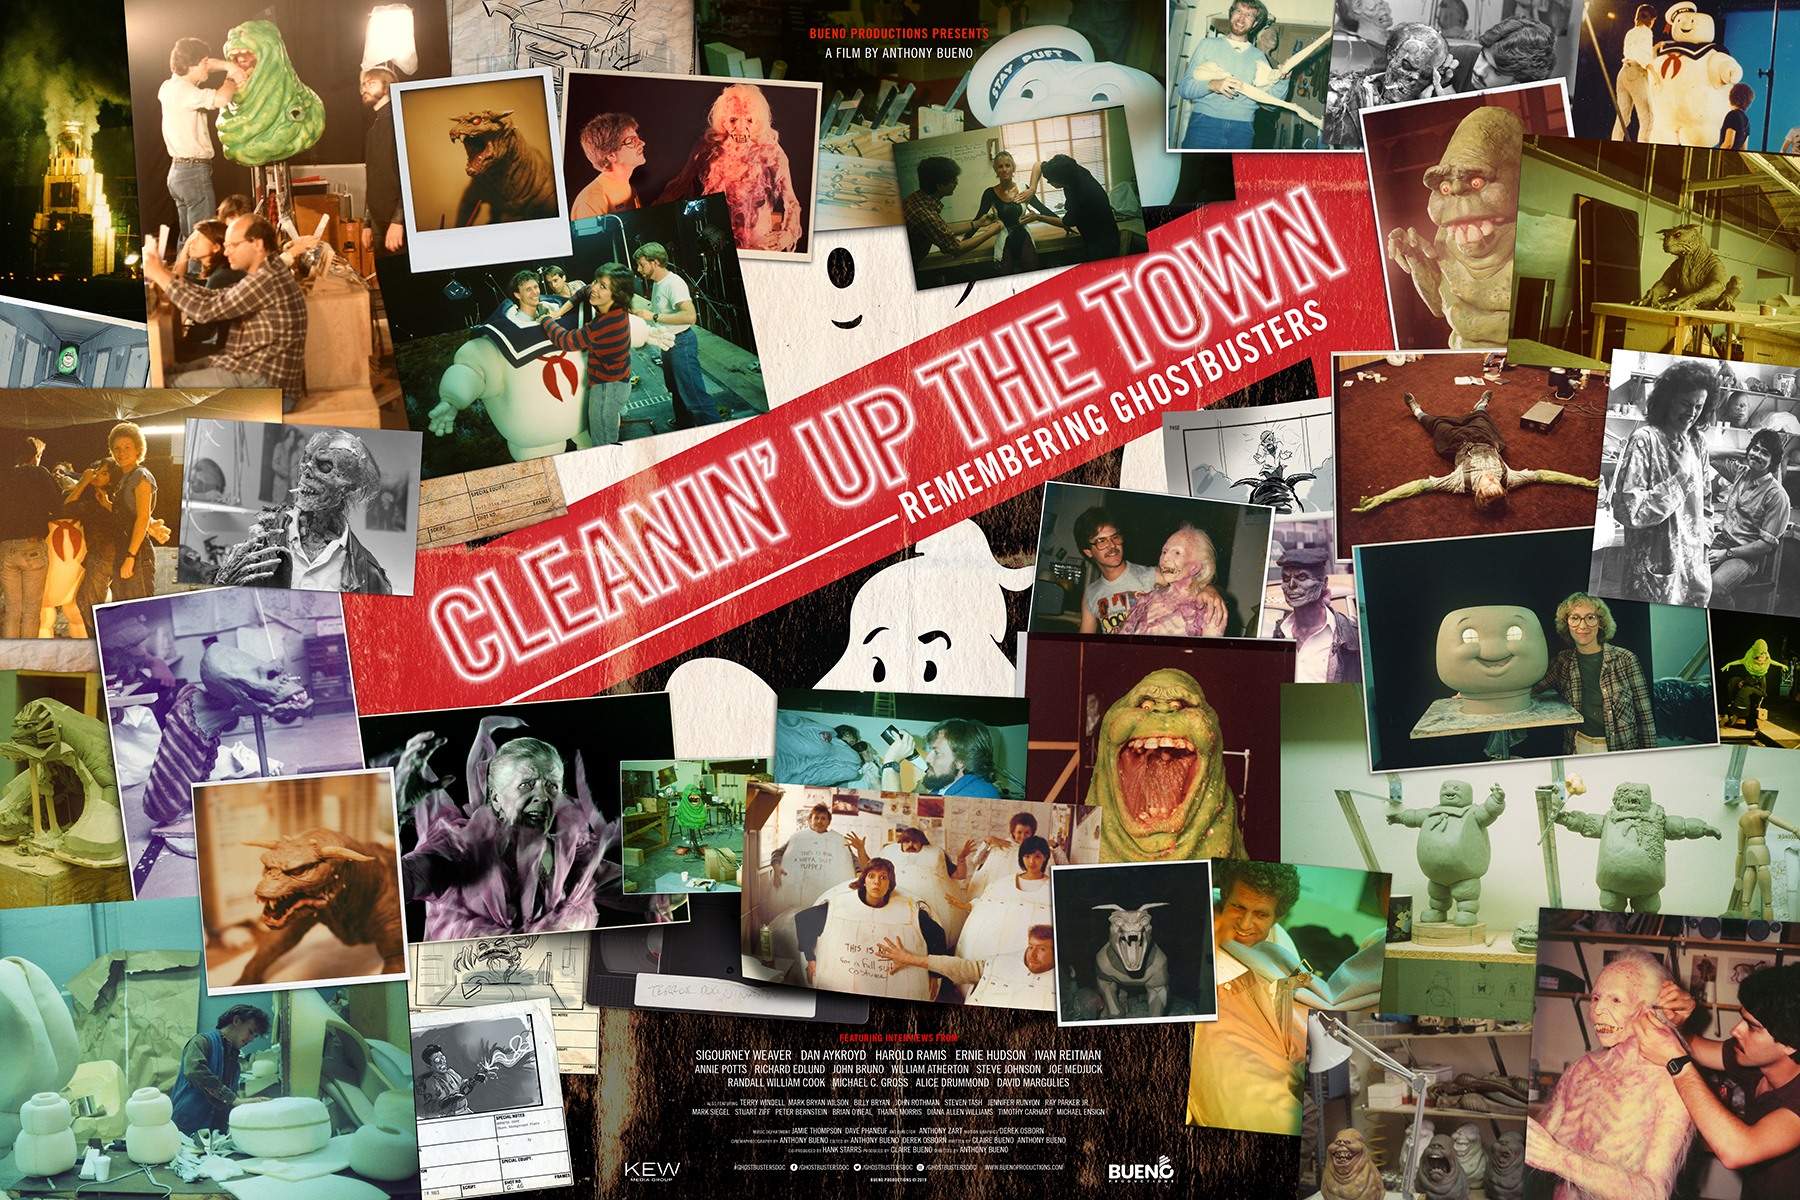 Trailer definitivo del documentario Cleanin’ Up the Town: ricordando Ghostbusters